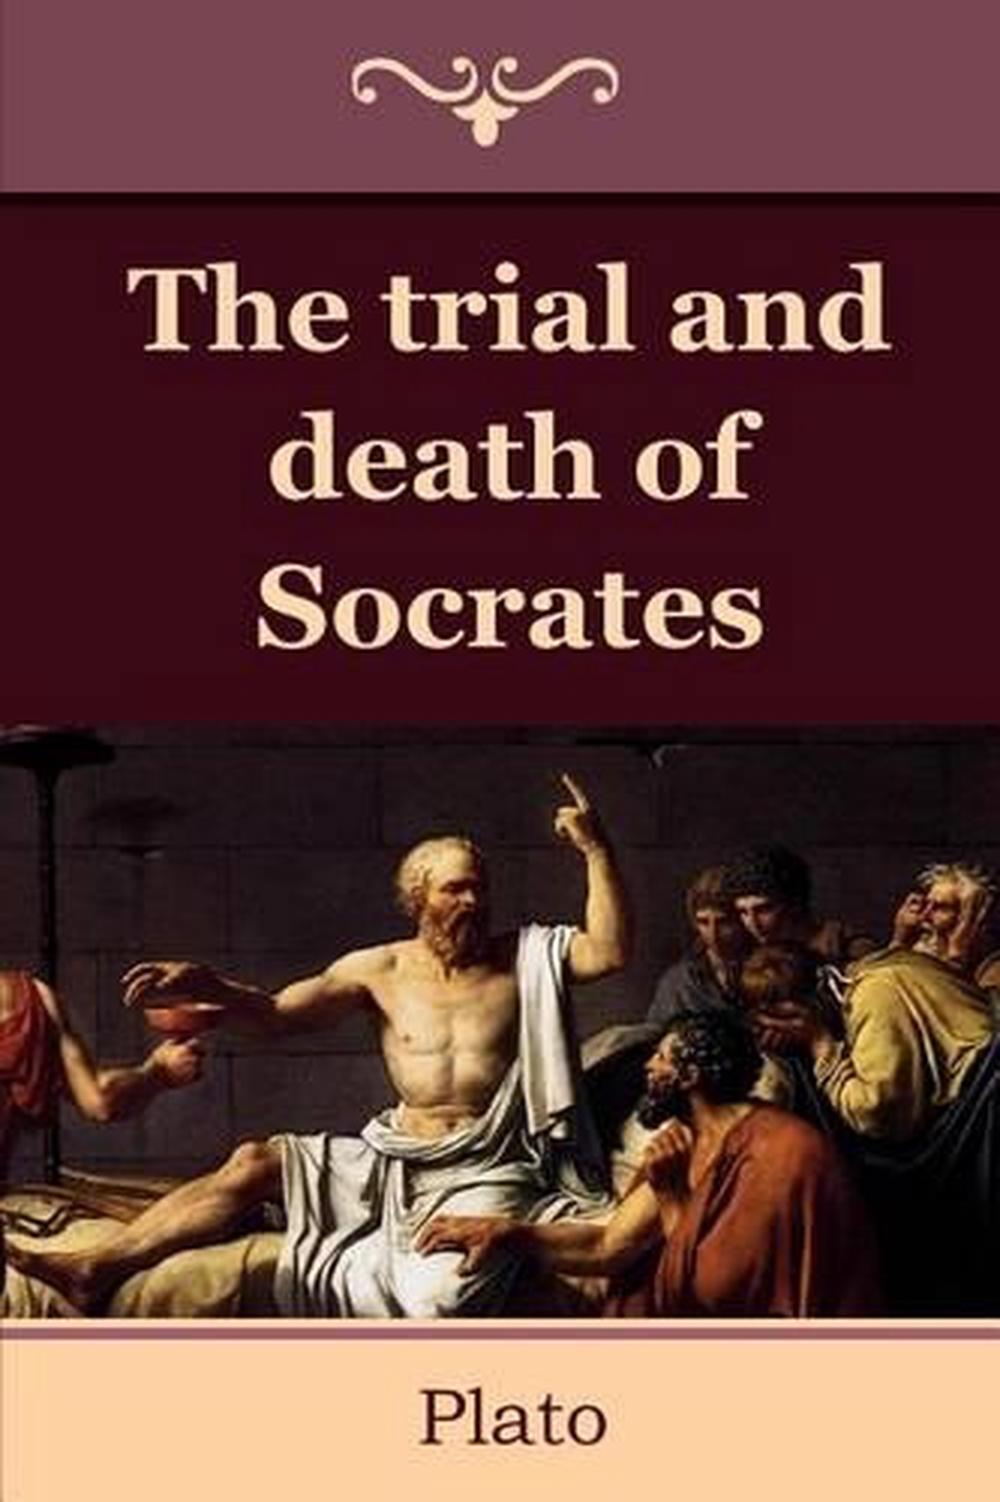 plato on the death of socrates